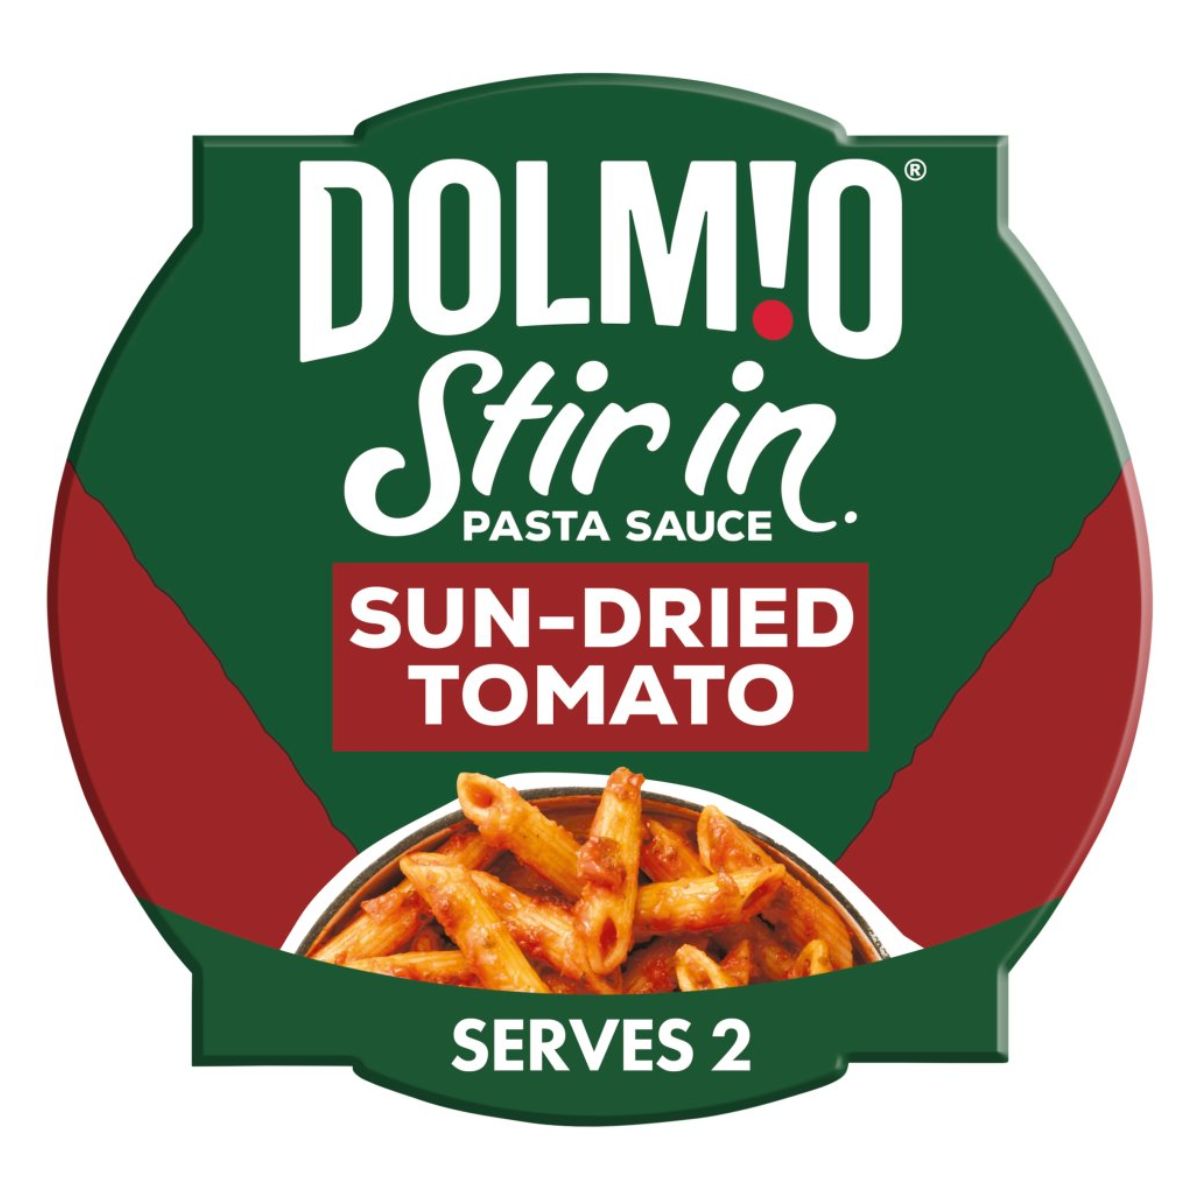 Dolmio - Stir In Sun Dried Tomato Pasta Sauce - 150g sun-dried tomato sauce.